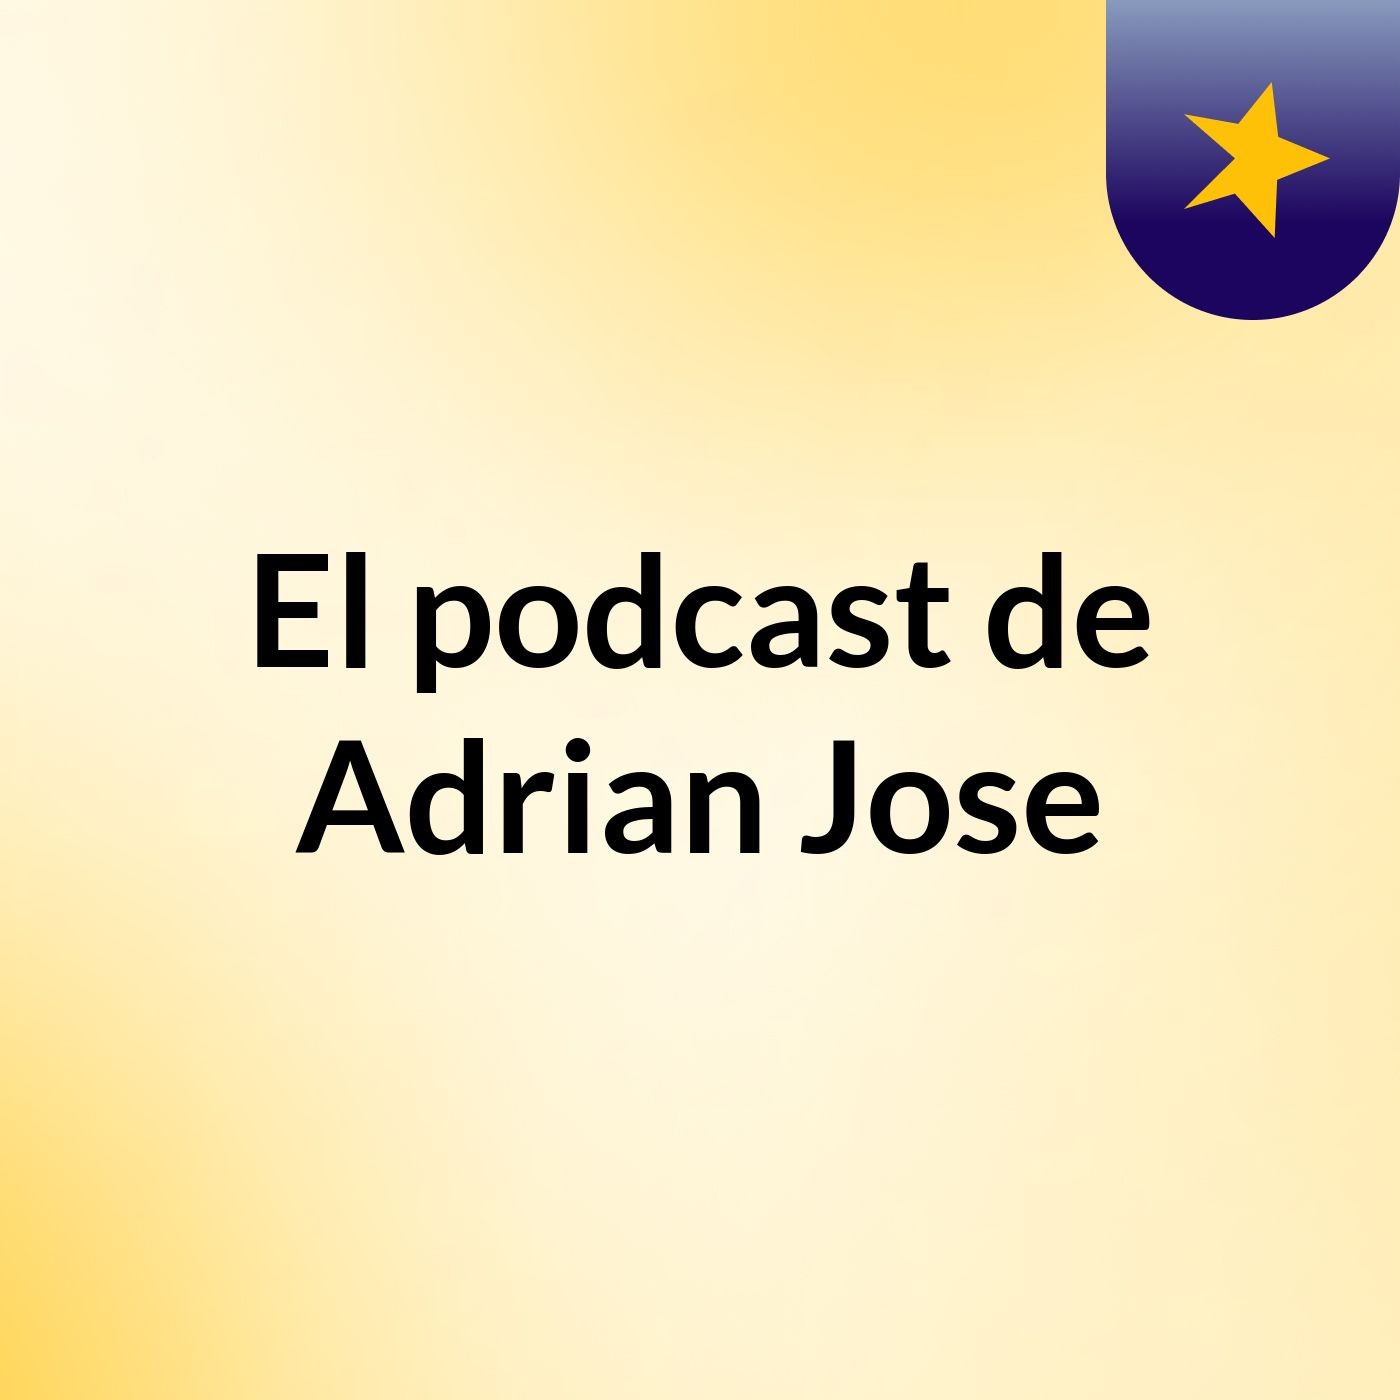 El podcast de Adrian Jose